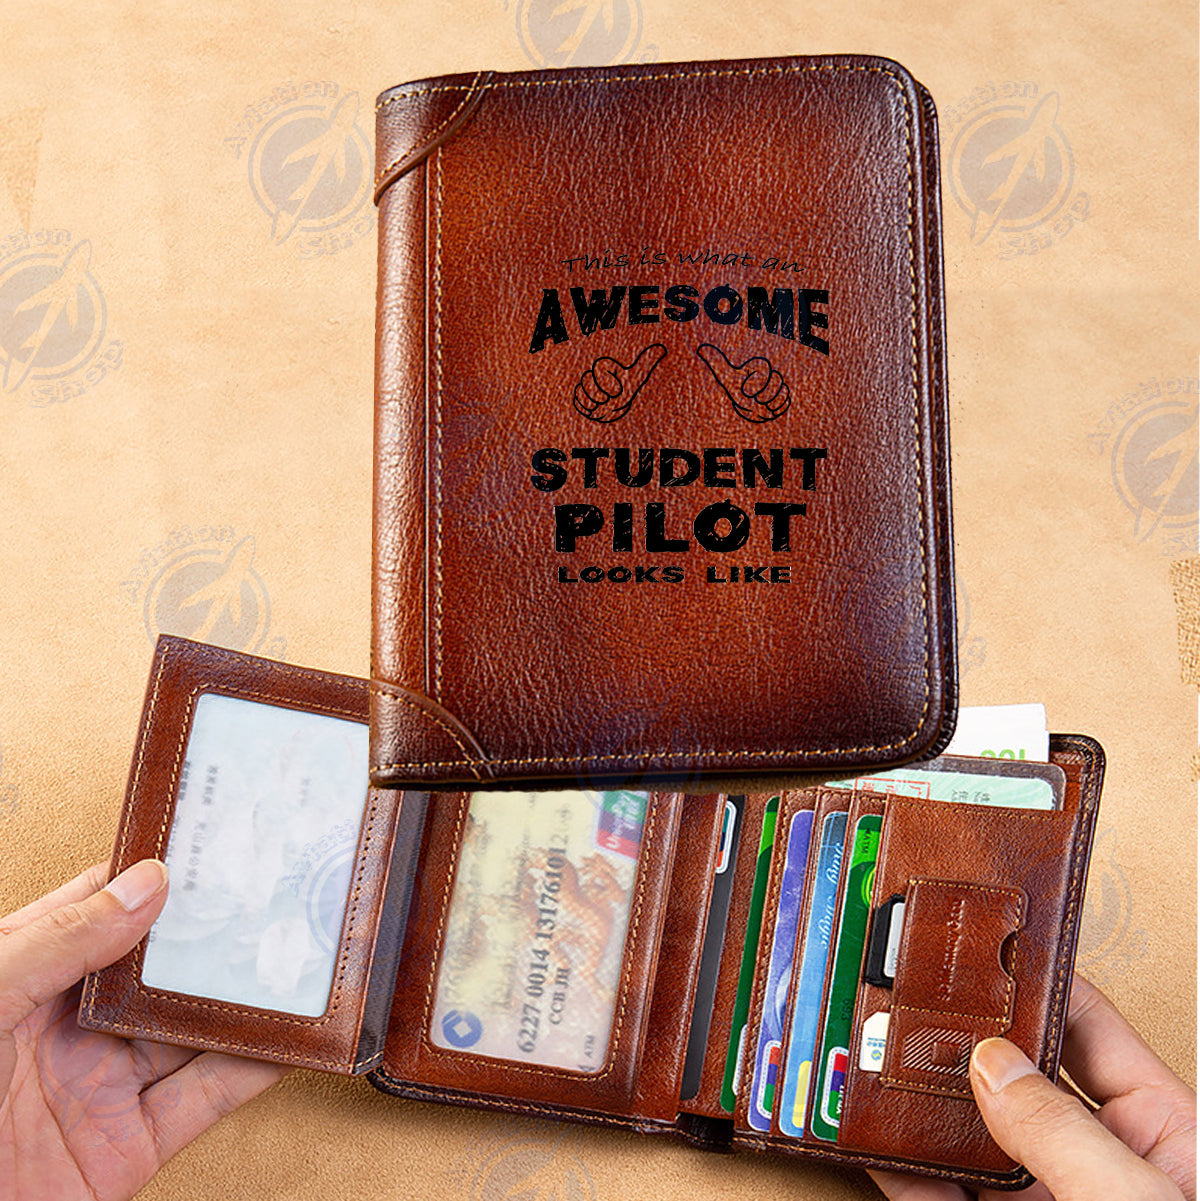 Student Pilot Designed Leather Wallets